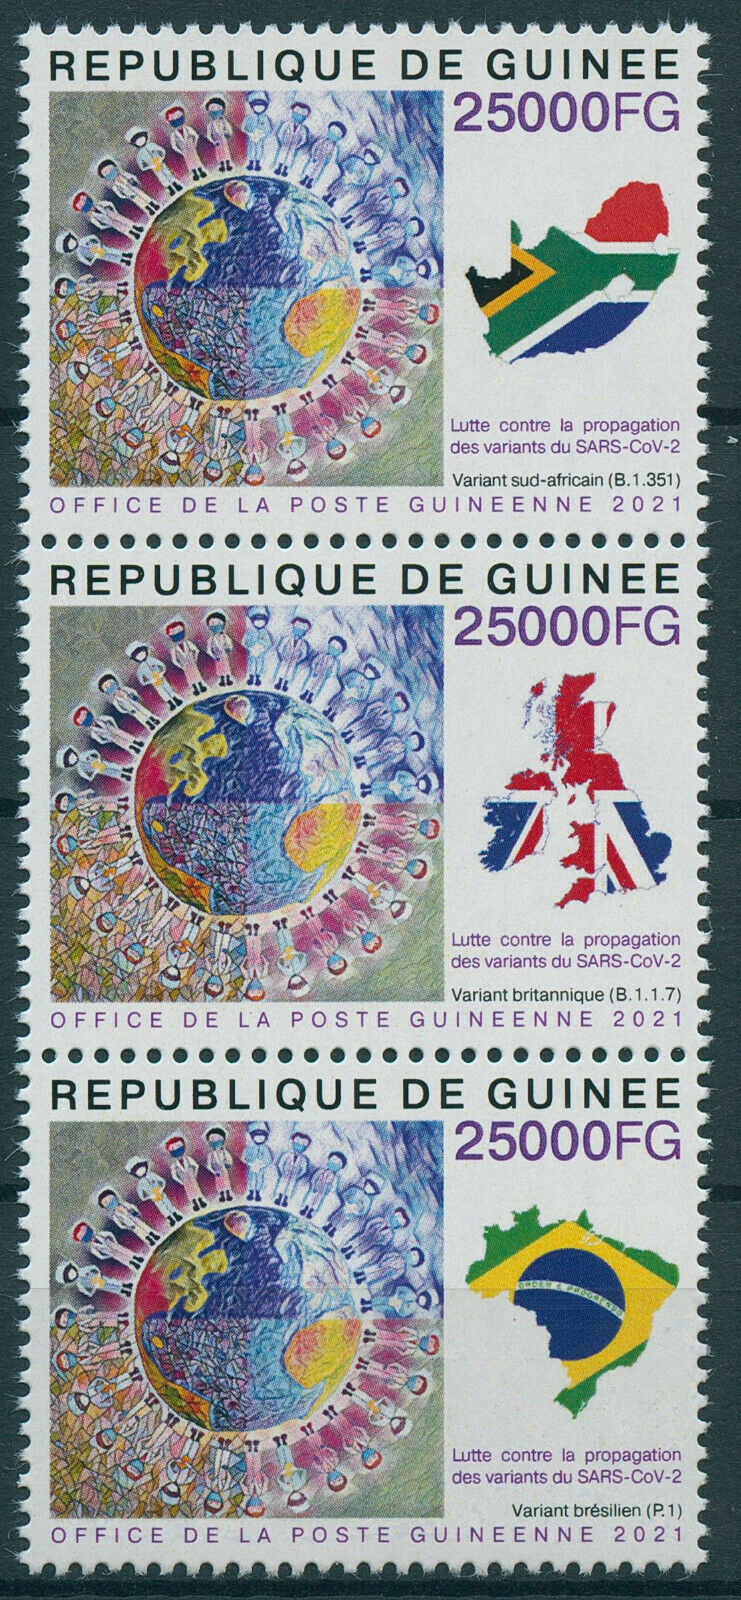 Guinea 2021 MNH Medical Stamps Corona Fight SARS-Cov-2 Variants Covid-19 Covid 3v Strip